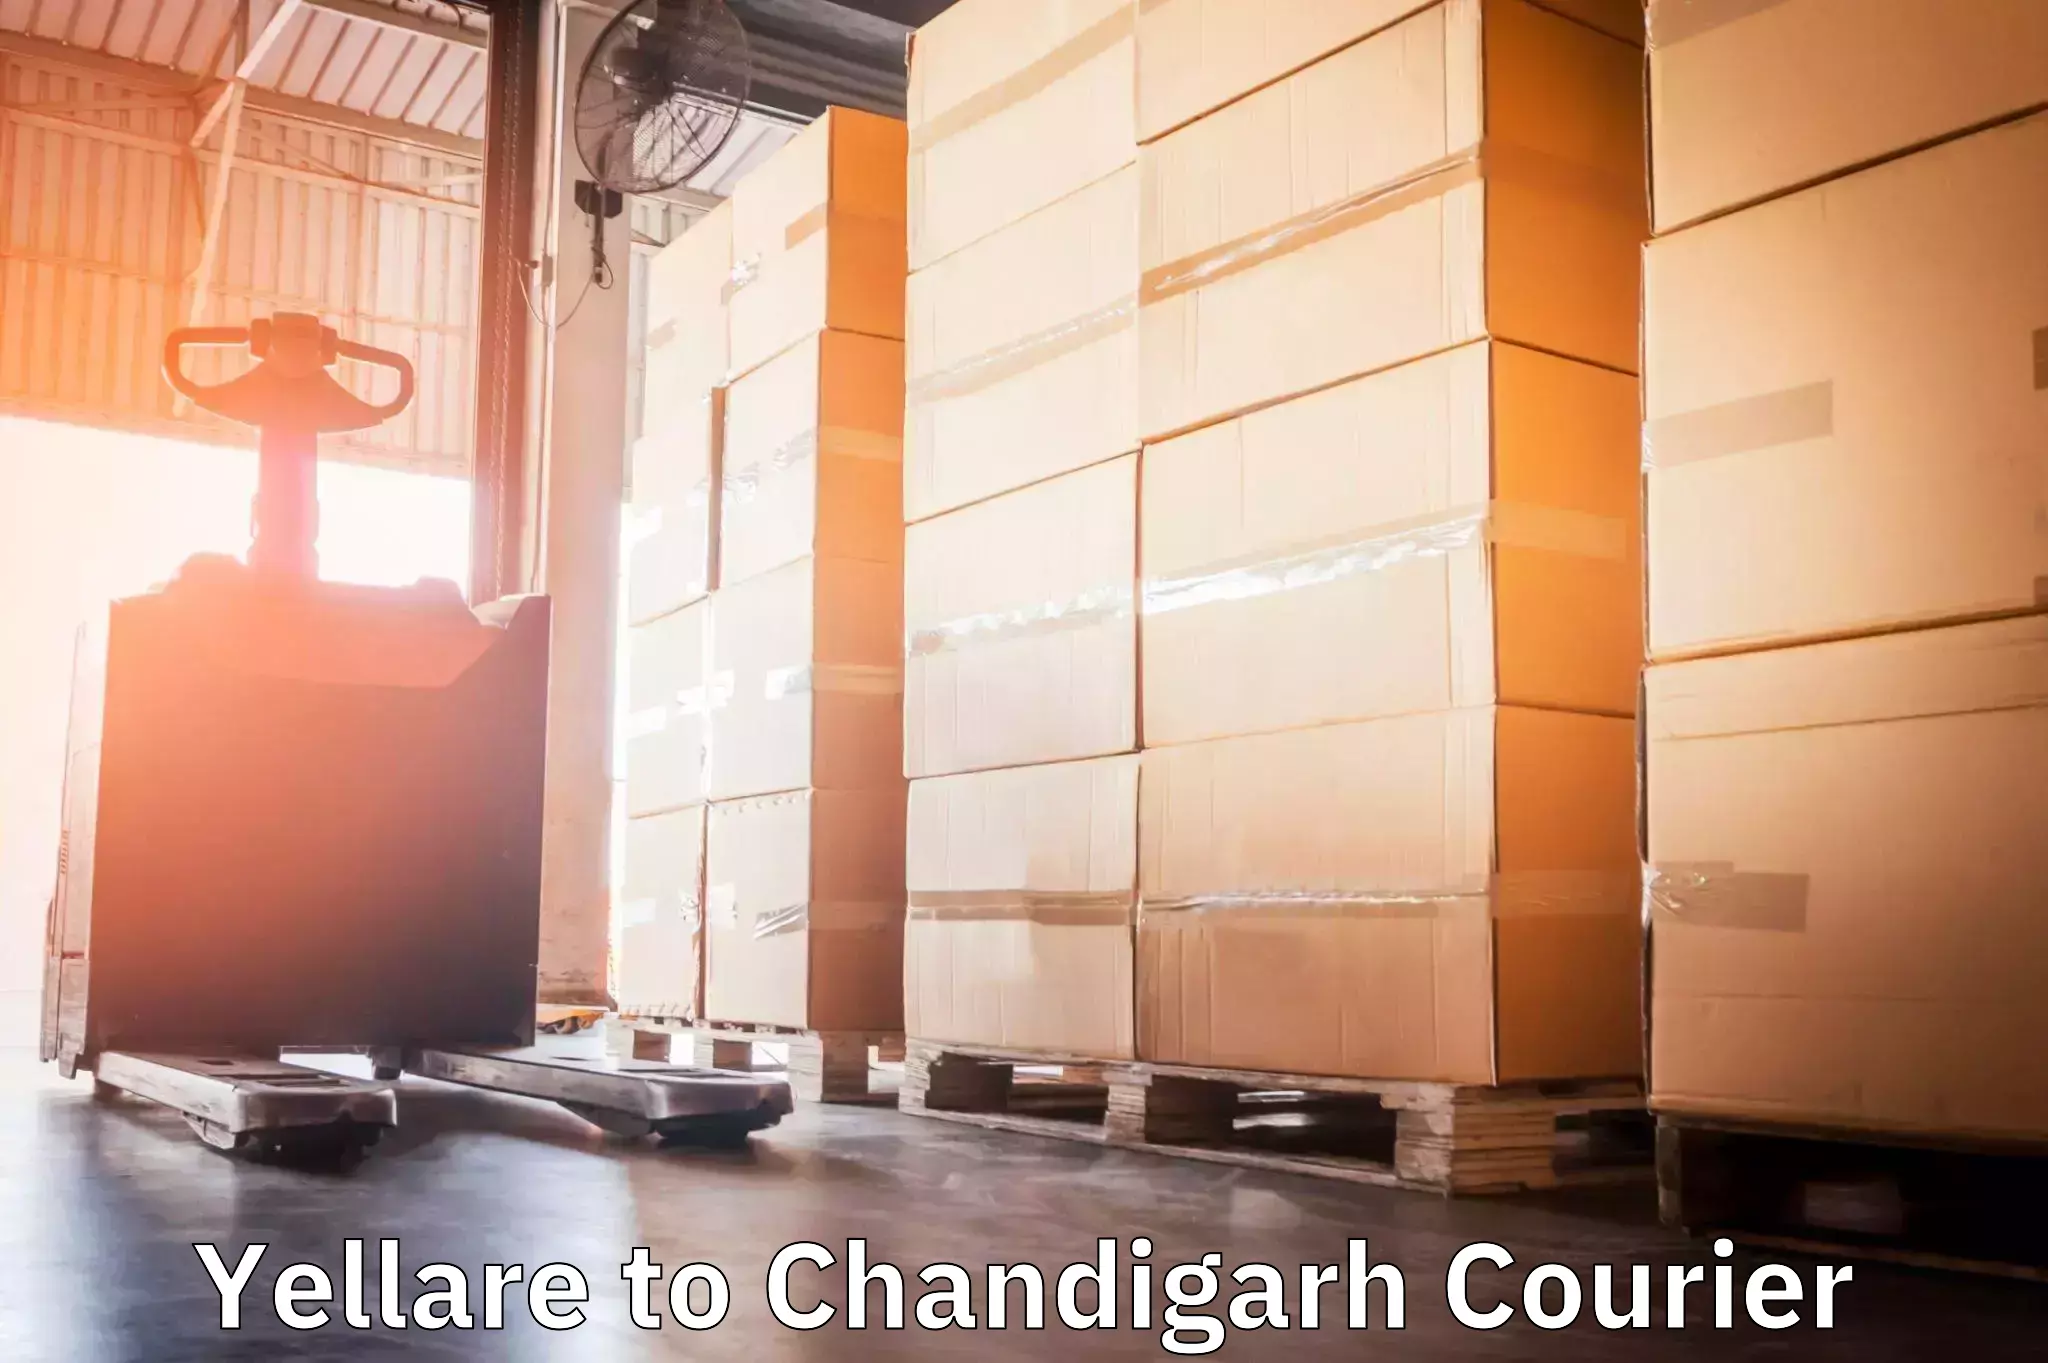 Express logistics providers Yellare to Chandigarh